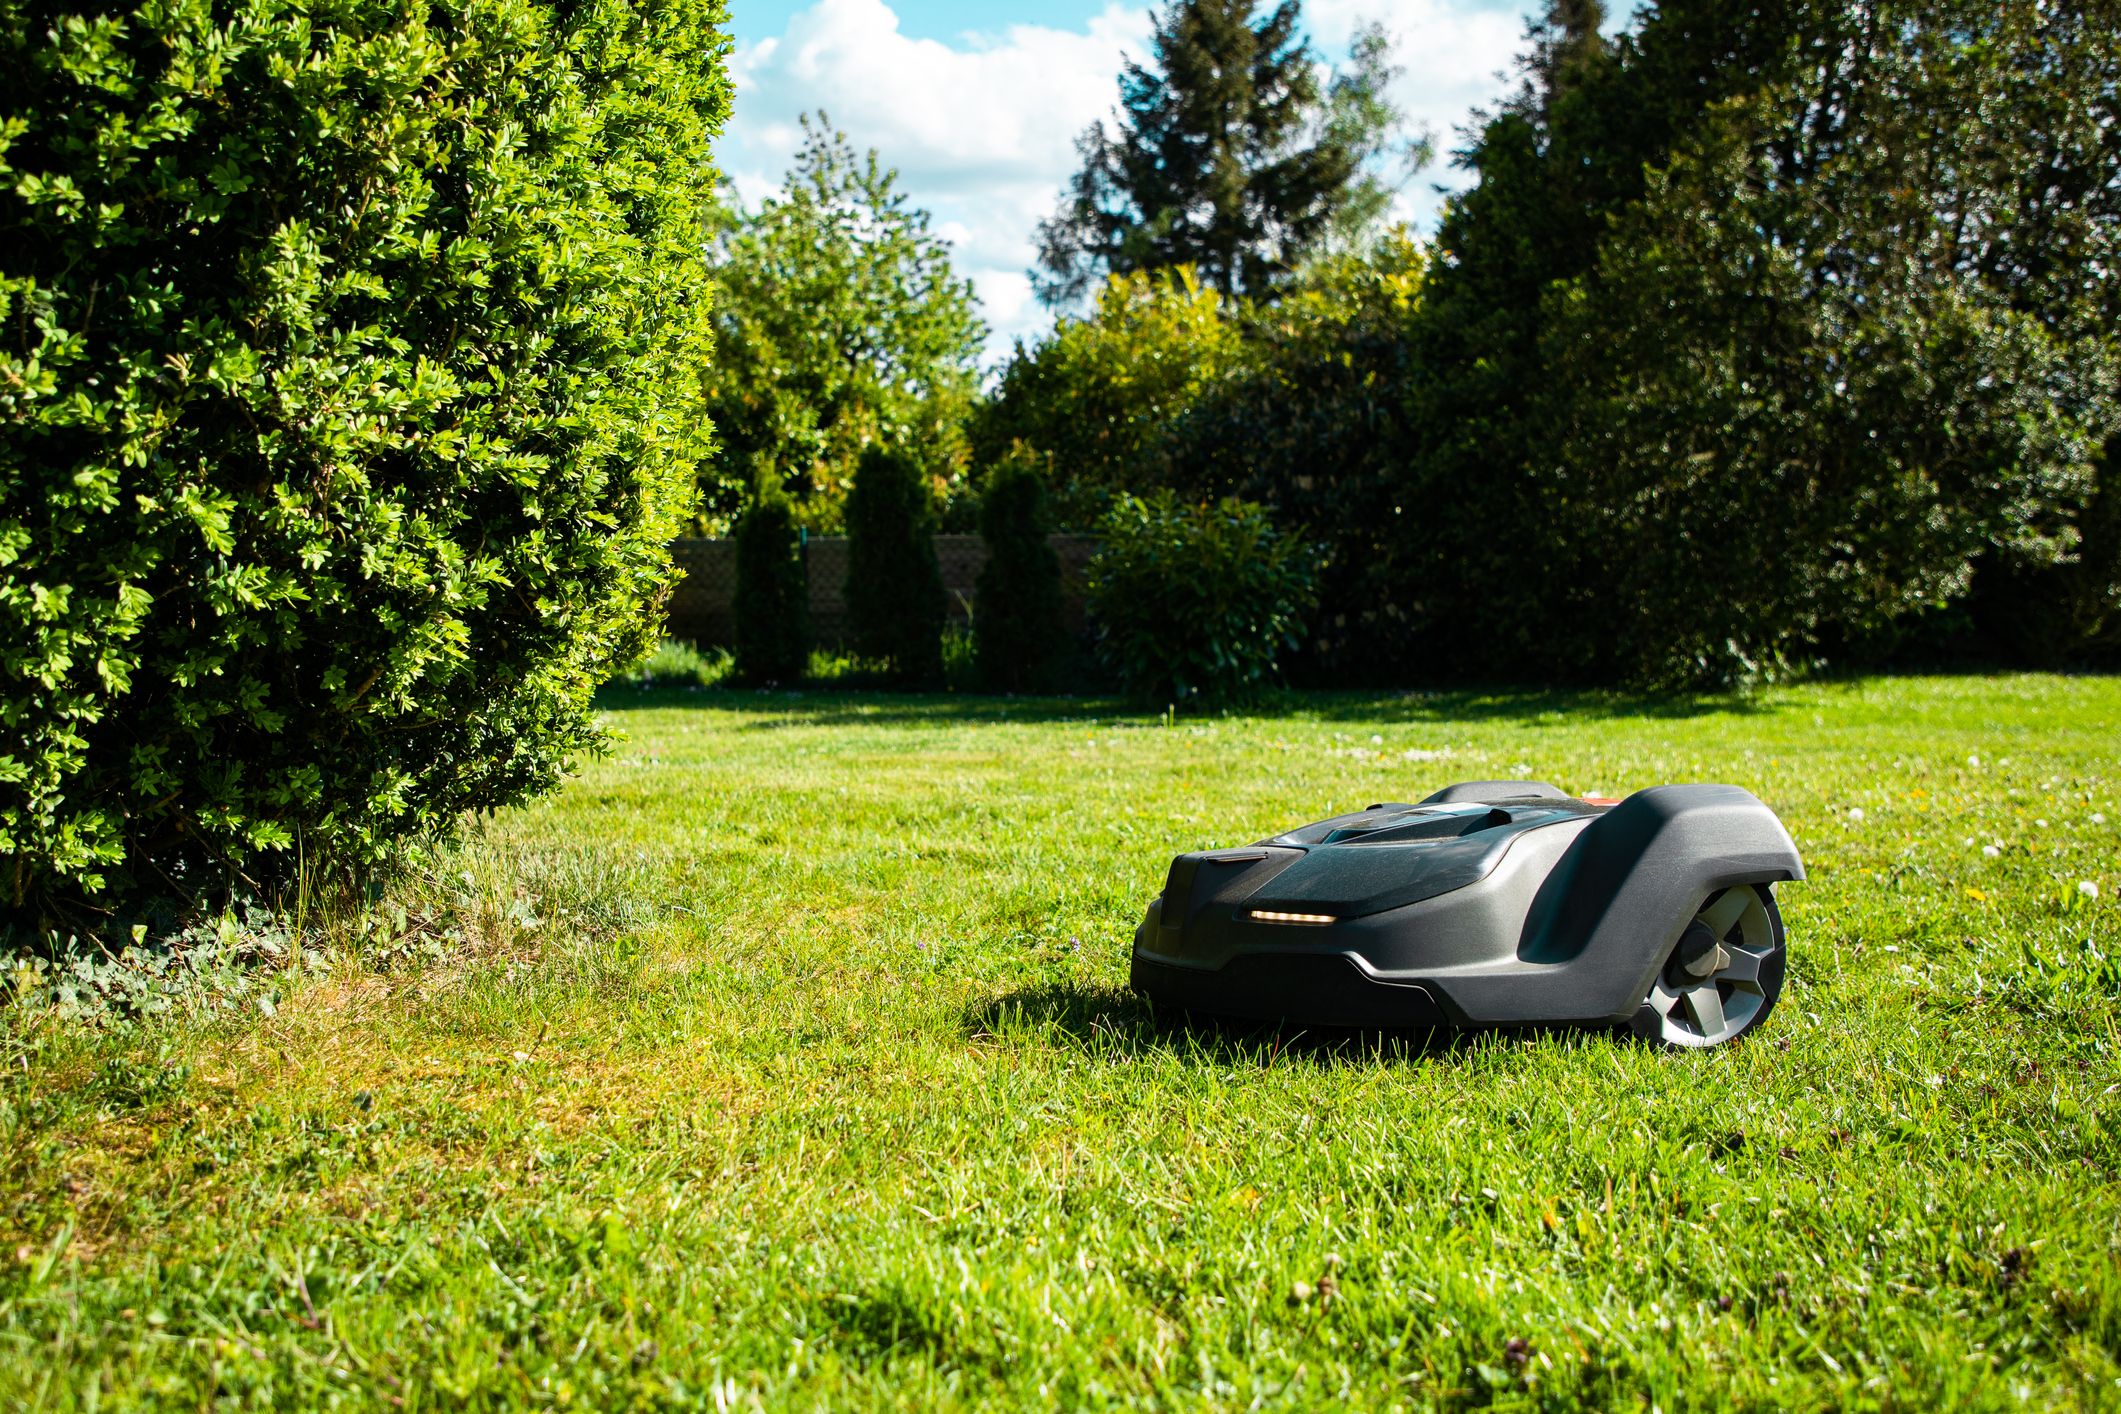 https://hips.hearstapps.com/hmg-prod/images/best-robot-lawn-mowers-1648822945.jpg